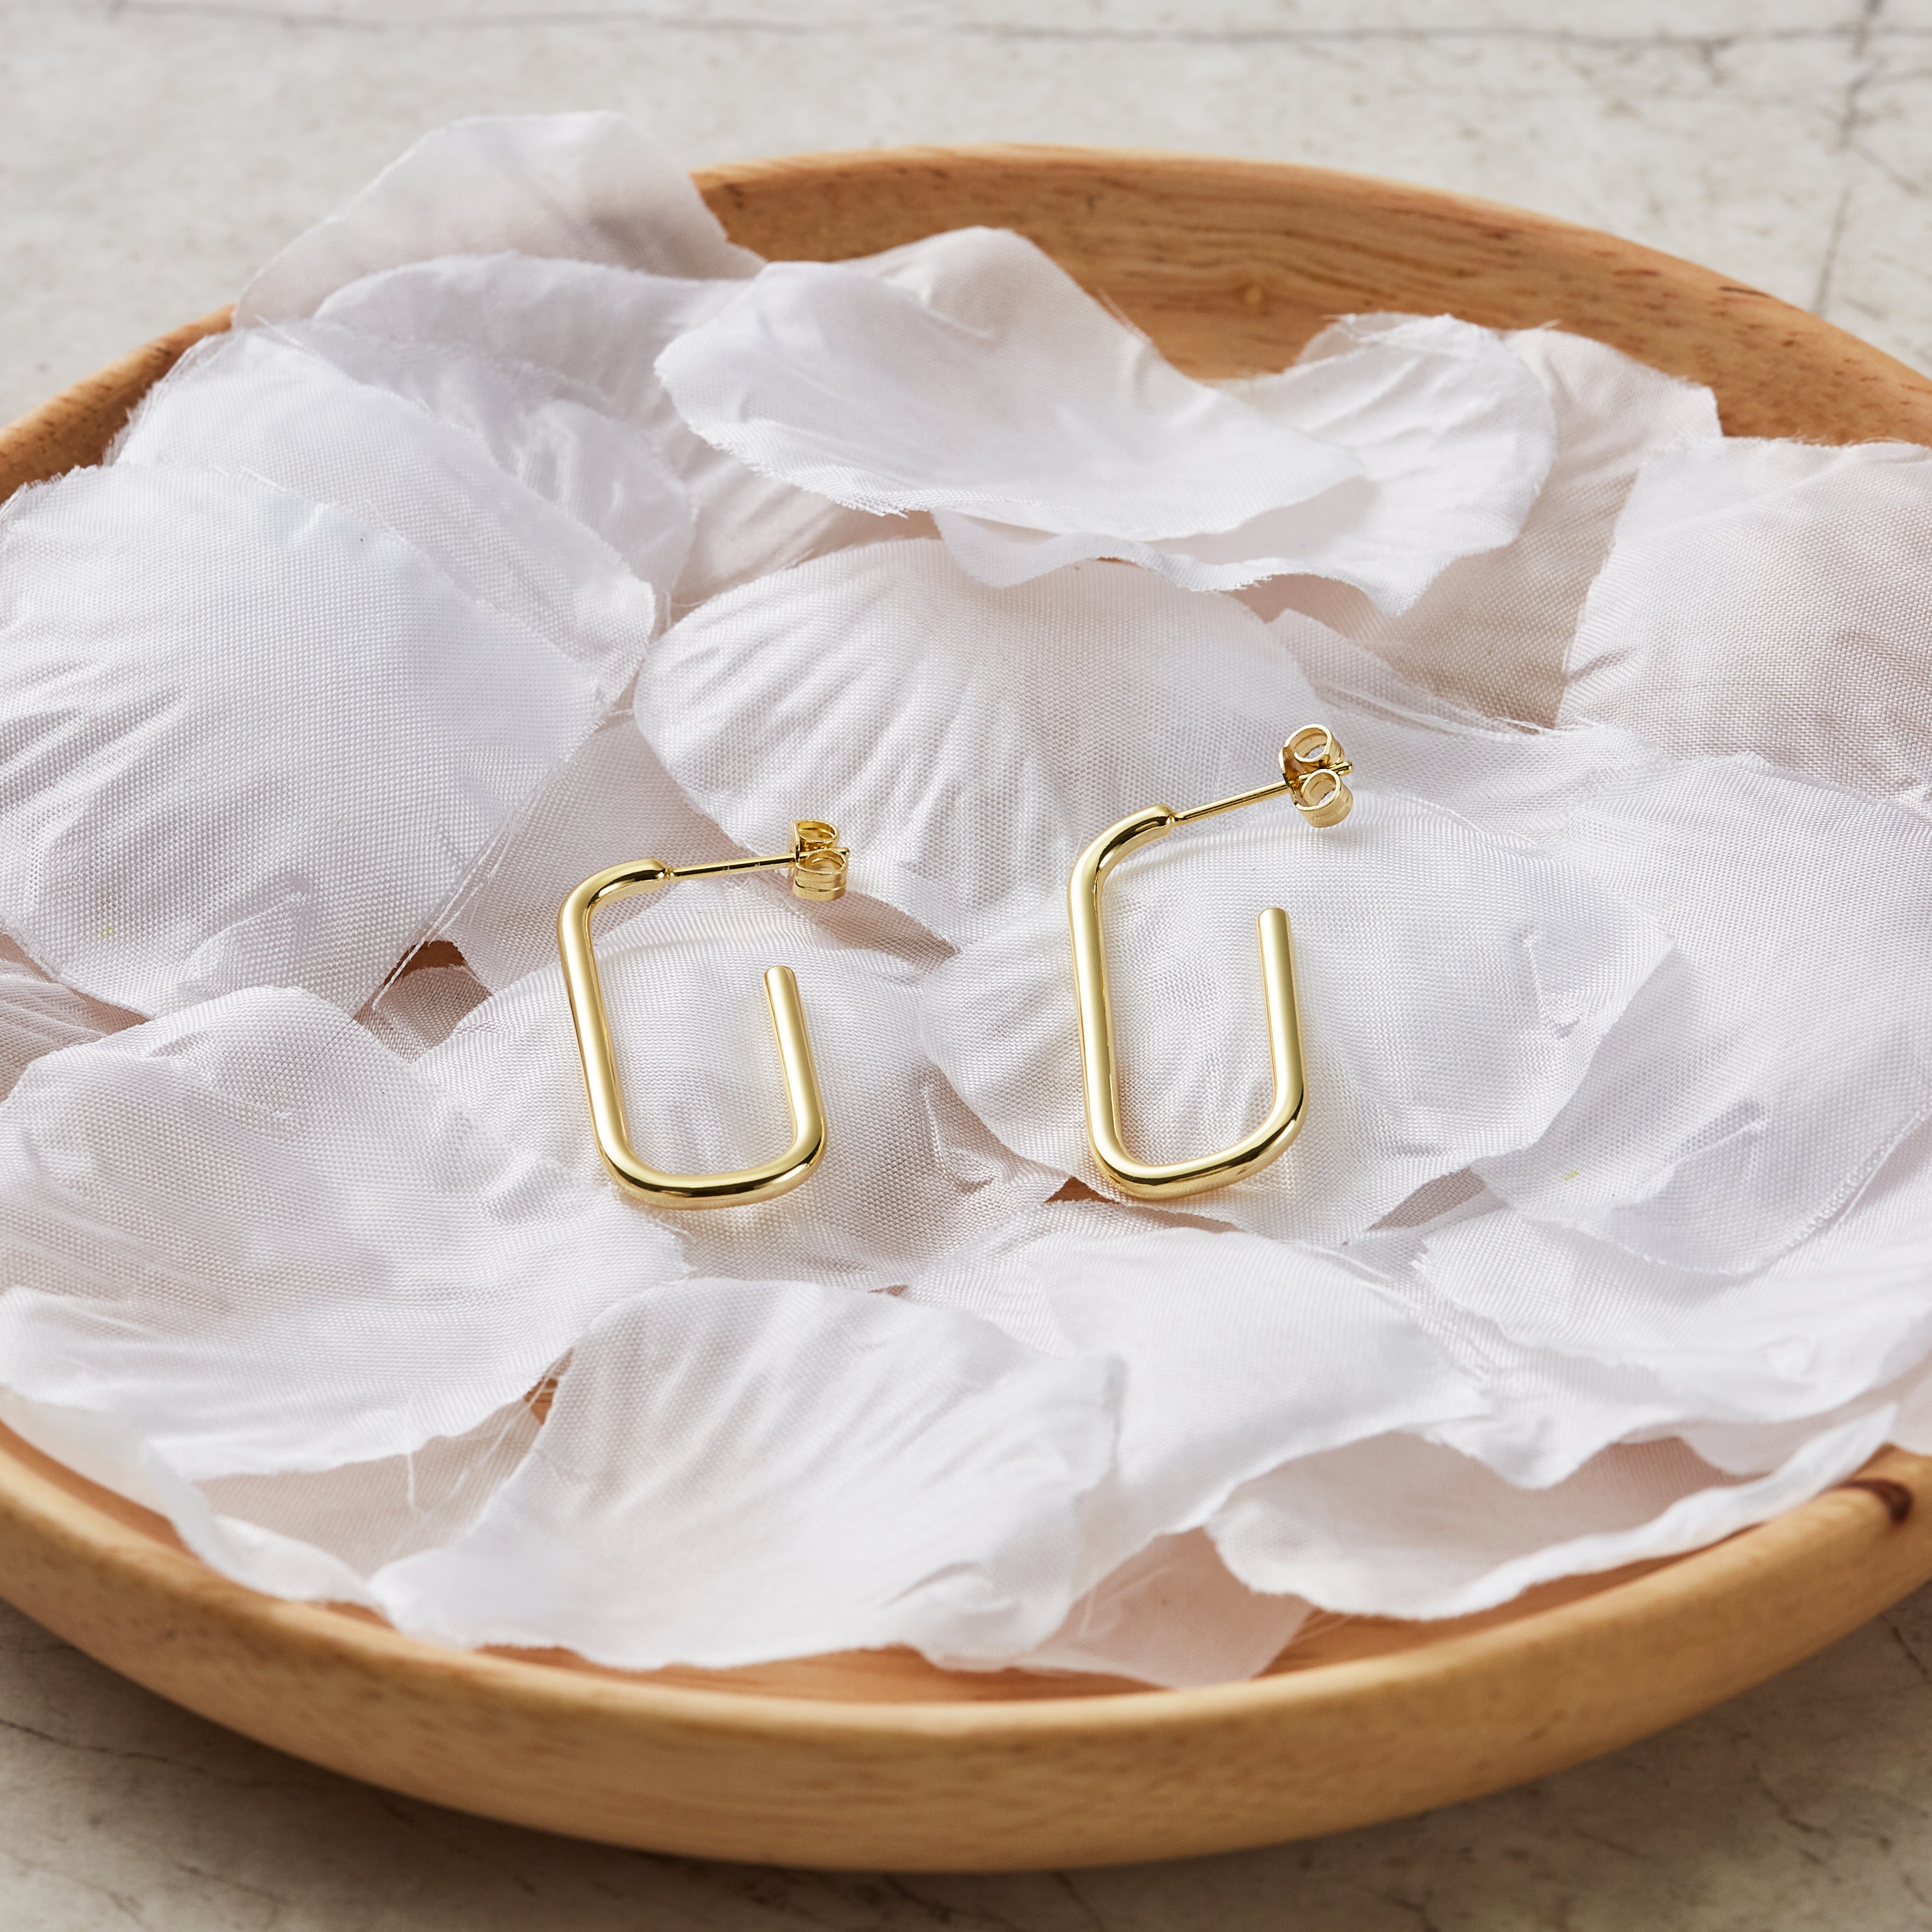 Gold Plated Rectangle Hoop Earrings